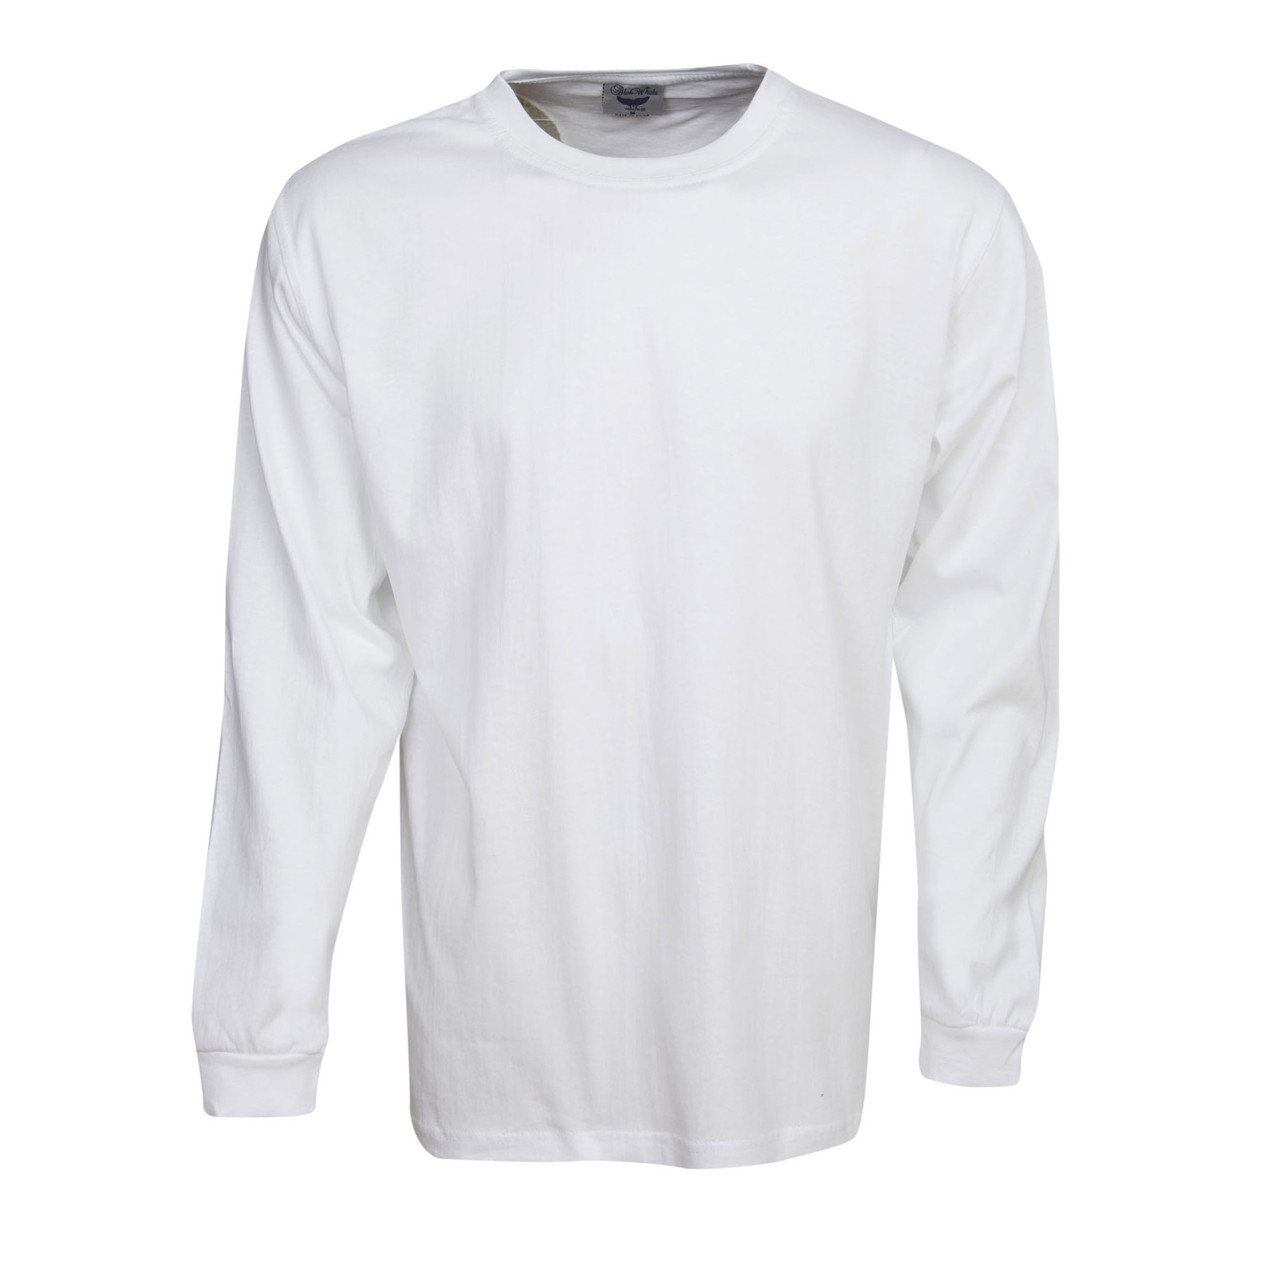 Plain Long Sleeve 100% Cotton Tshirts | Shop Wholesale Clothing Online